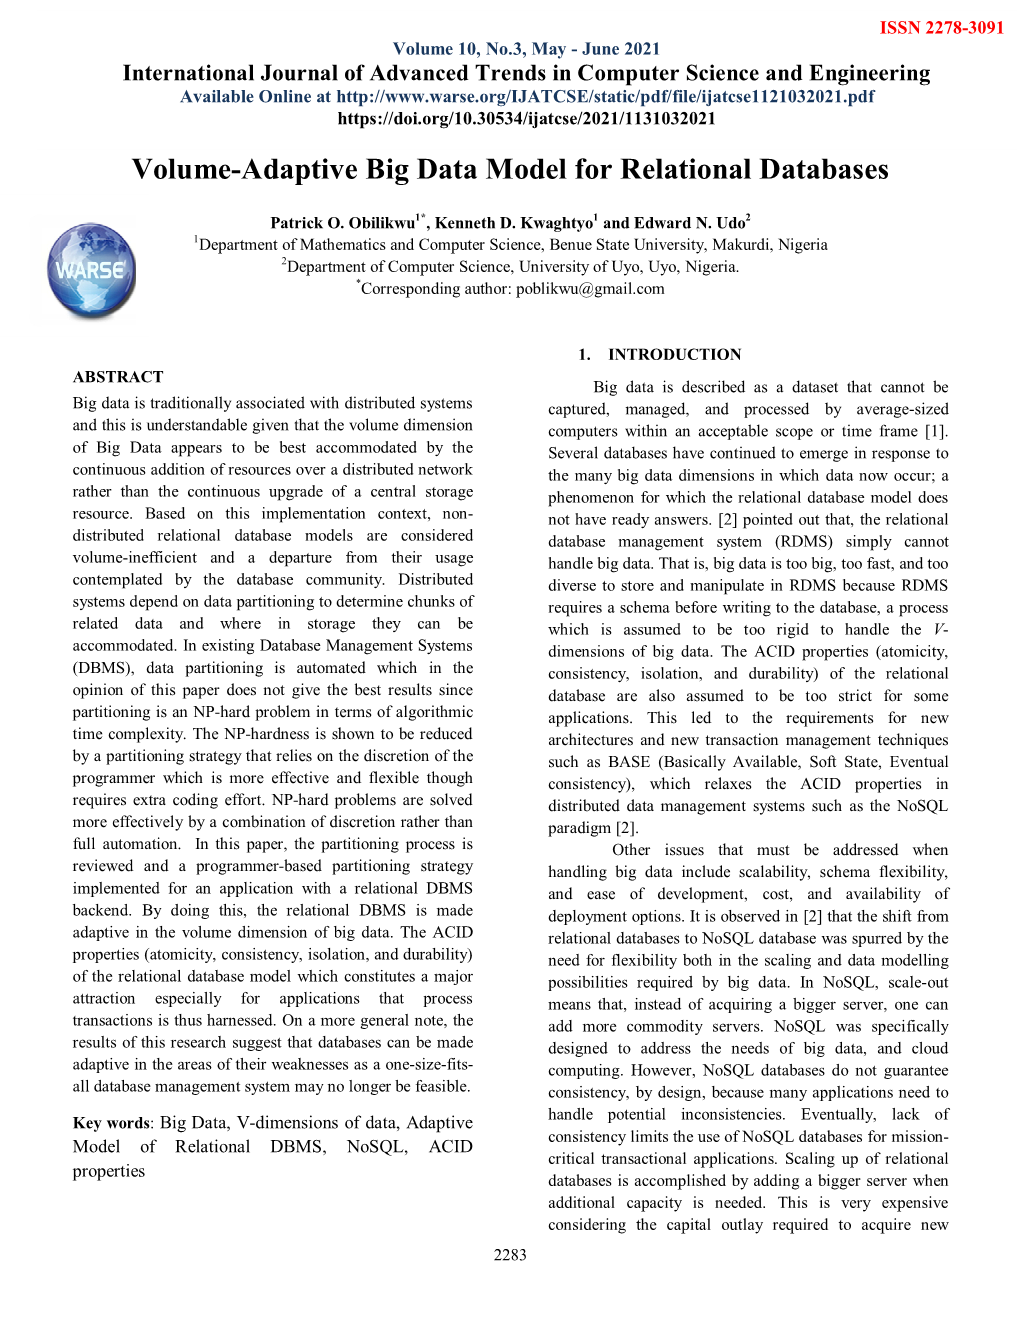 Volume-Adaptive Big Data Model for Relational Databases